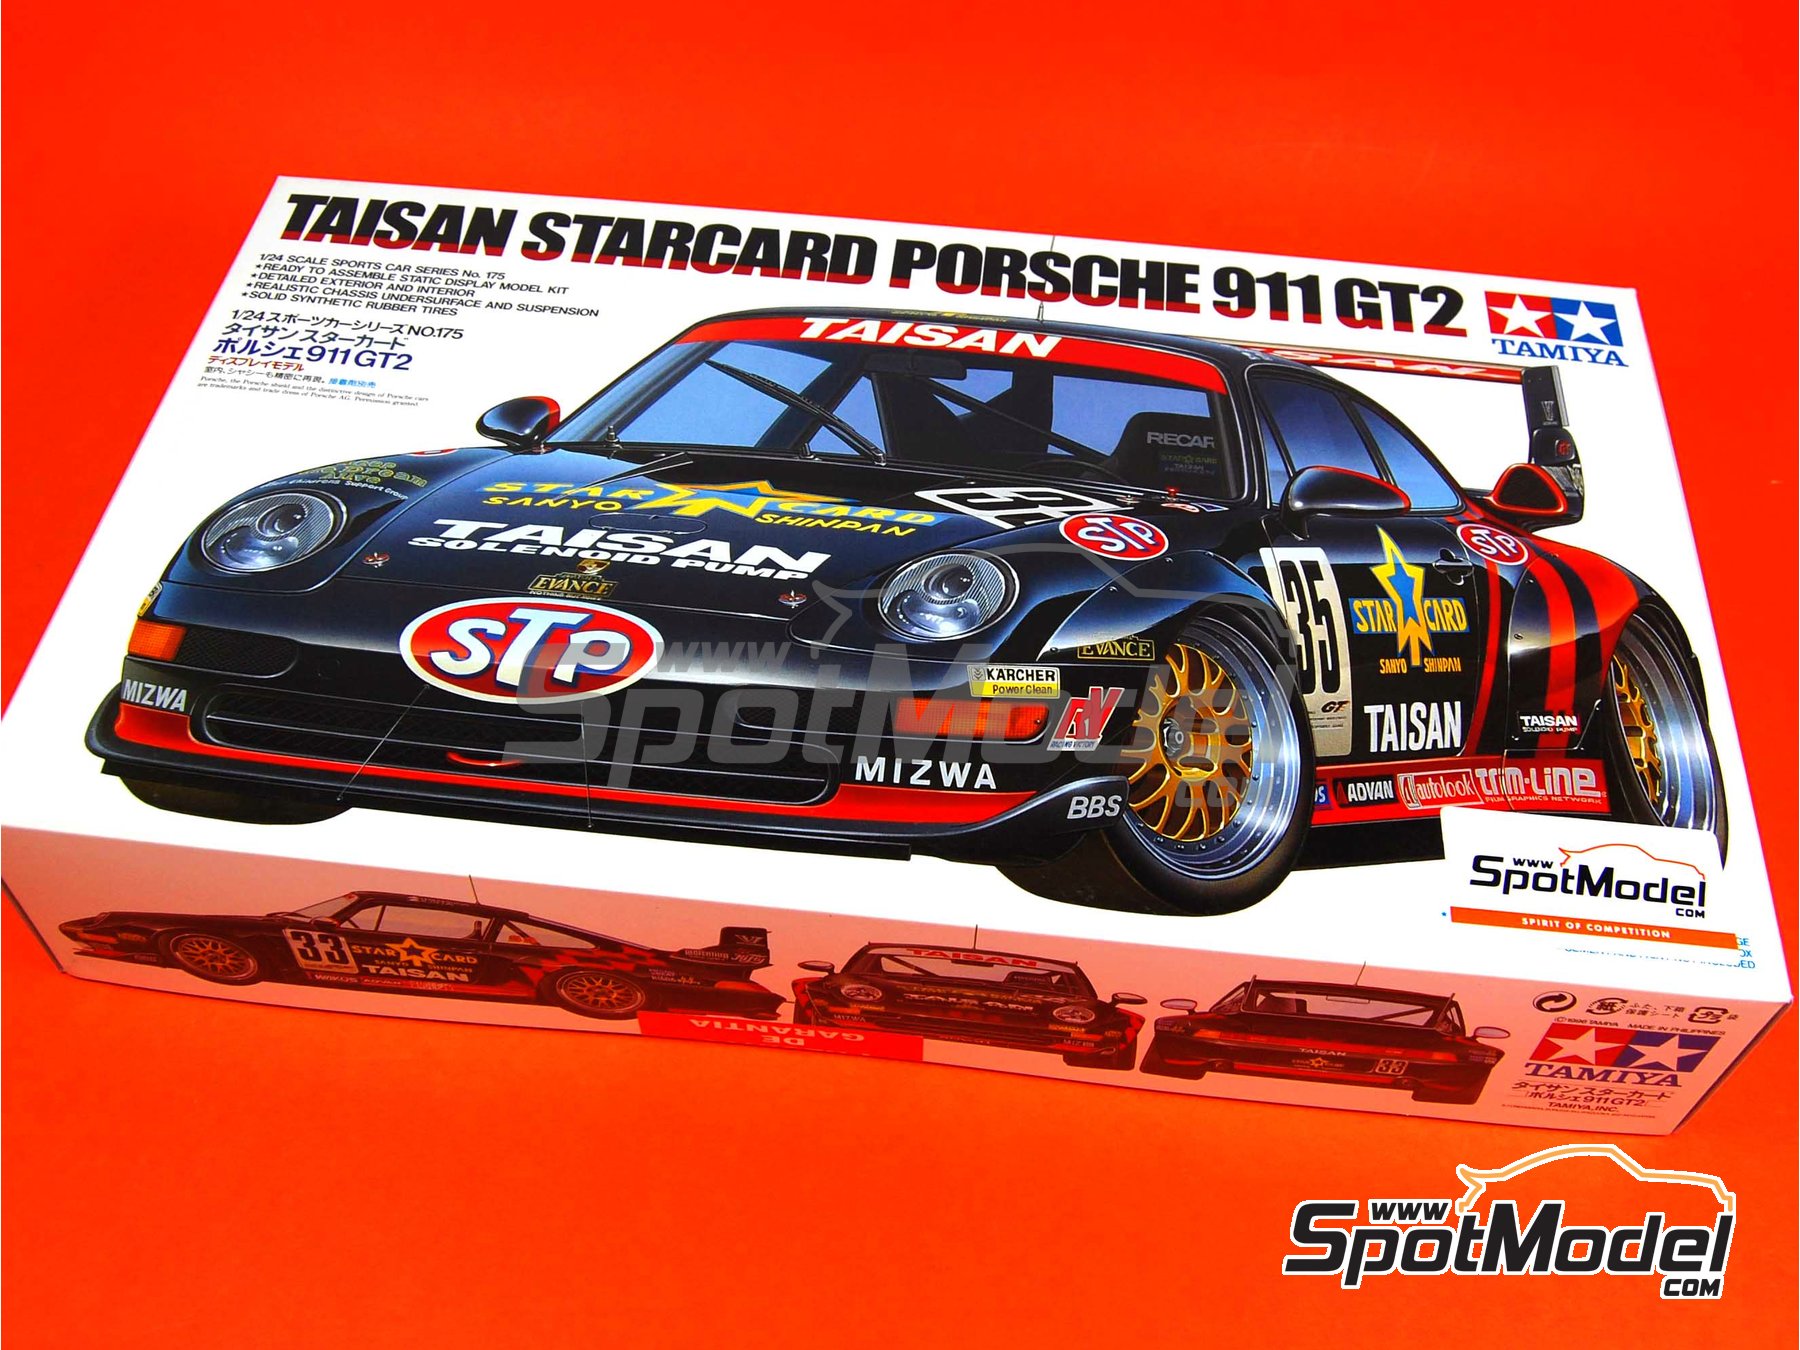 Tamiya 24175: Car scale model kit 1/24 scale Porsche 911 993 GT2 Taisan  Team sponsored by Starcard #33, 35 Hideshi Matsuda (JP) Kaoru Iida  (JP), Anthony Reid (GB)